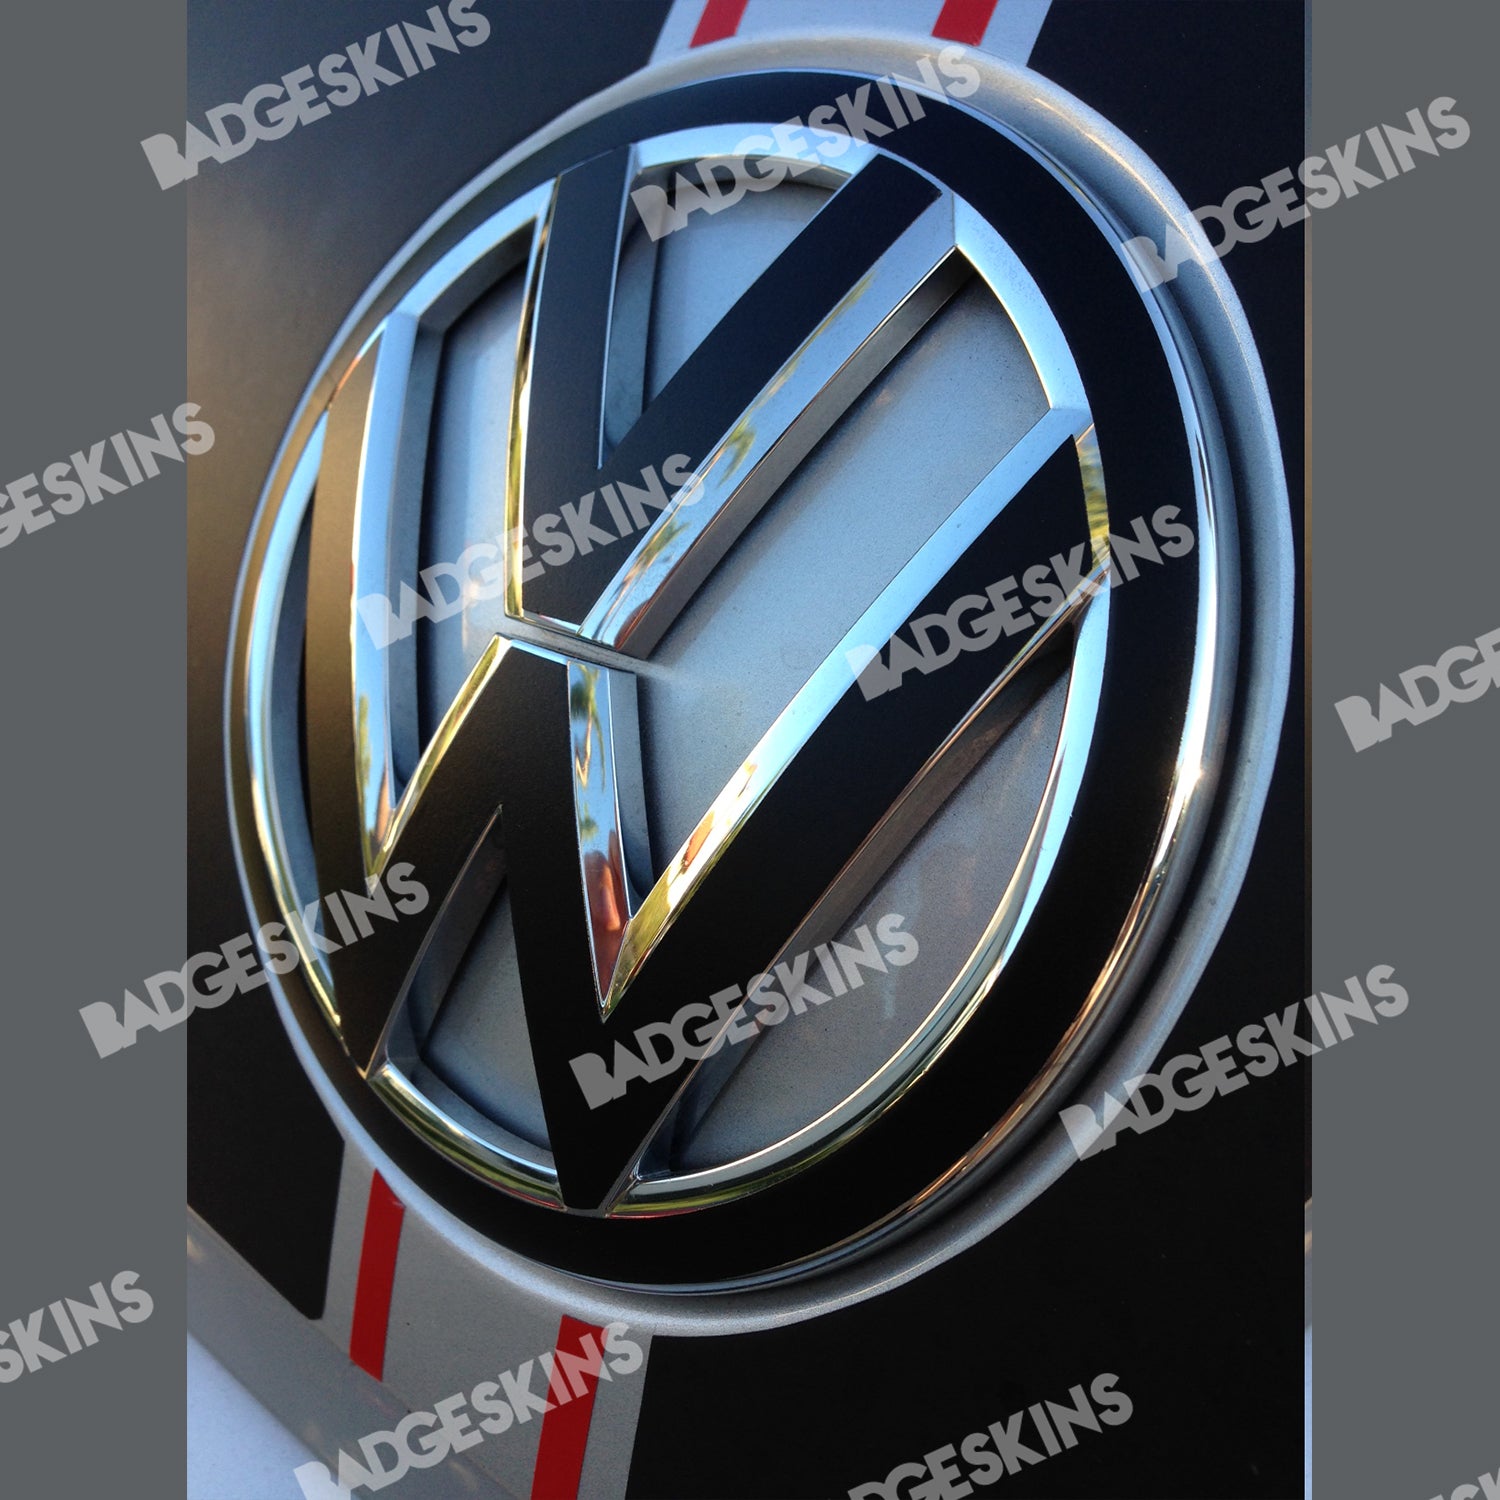 Pink VW Volkswagen Emblem for Steering Wheel LOGO Sticker Decal Beetle